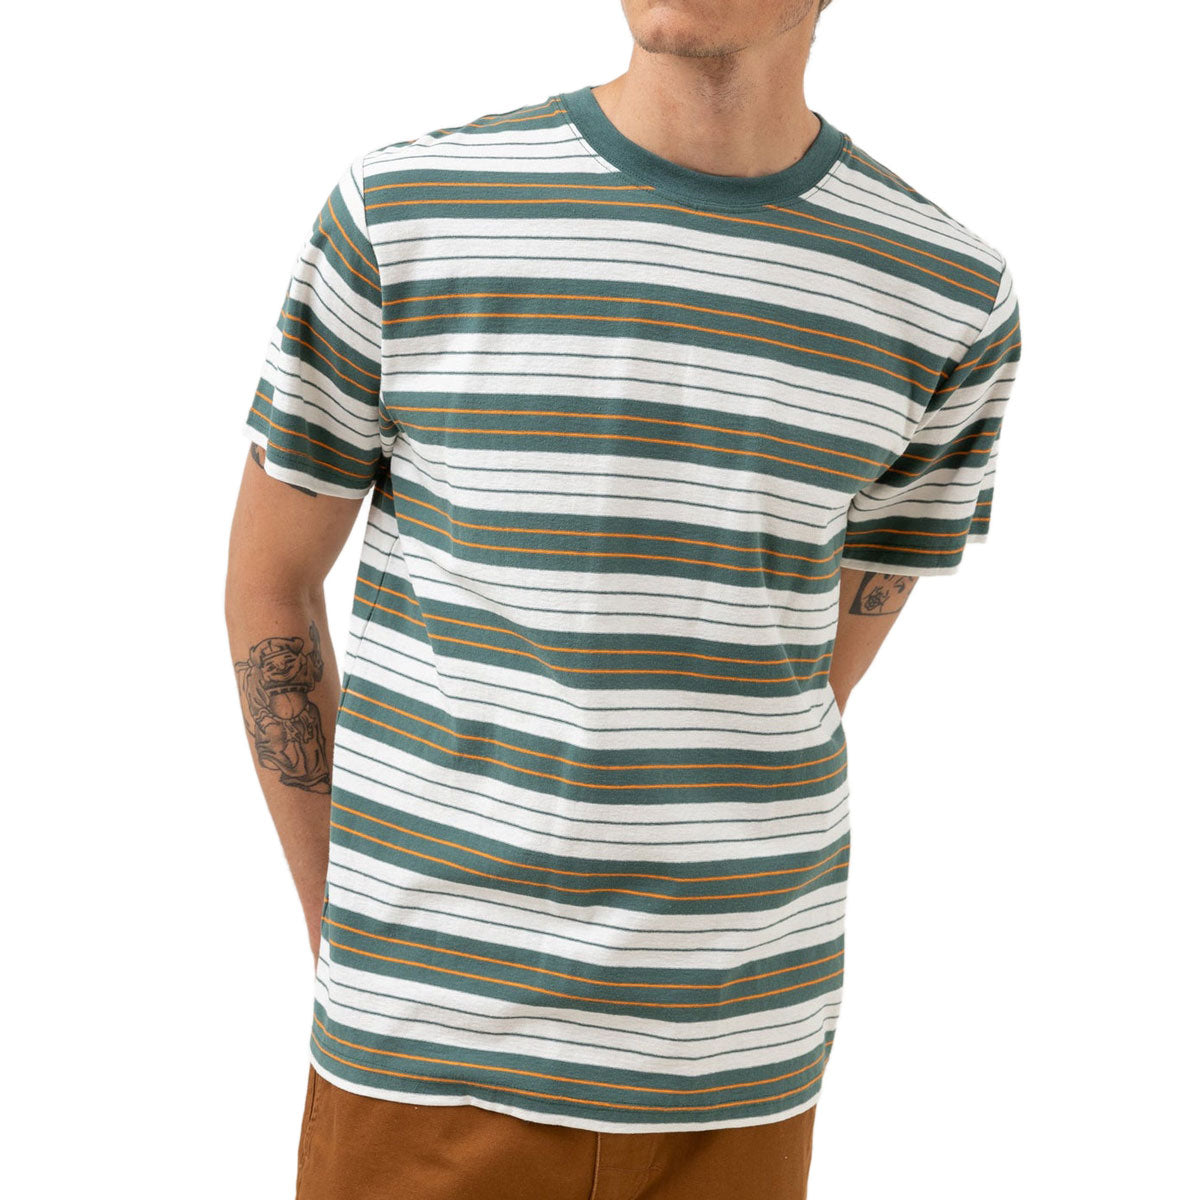 Rhythm Vintage Stripe T-Shirt - Teal image 2